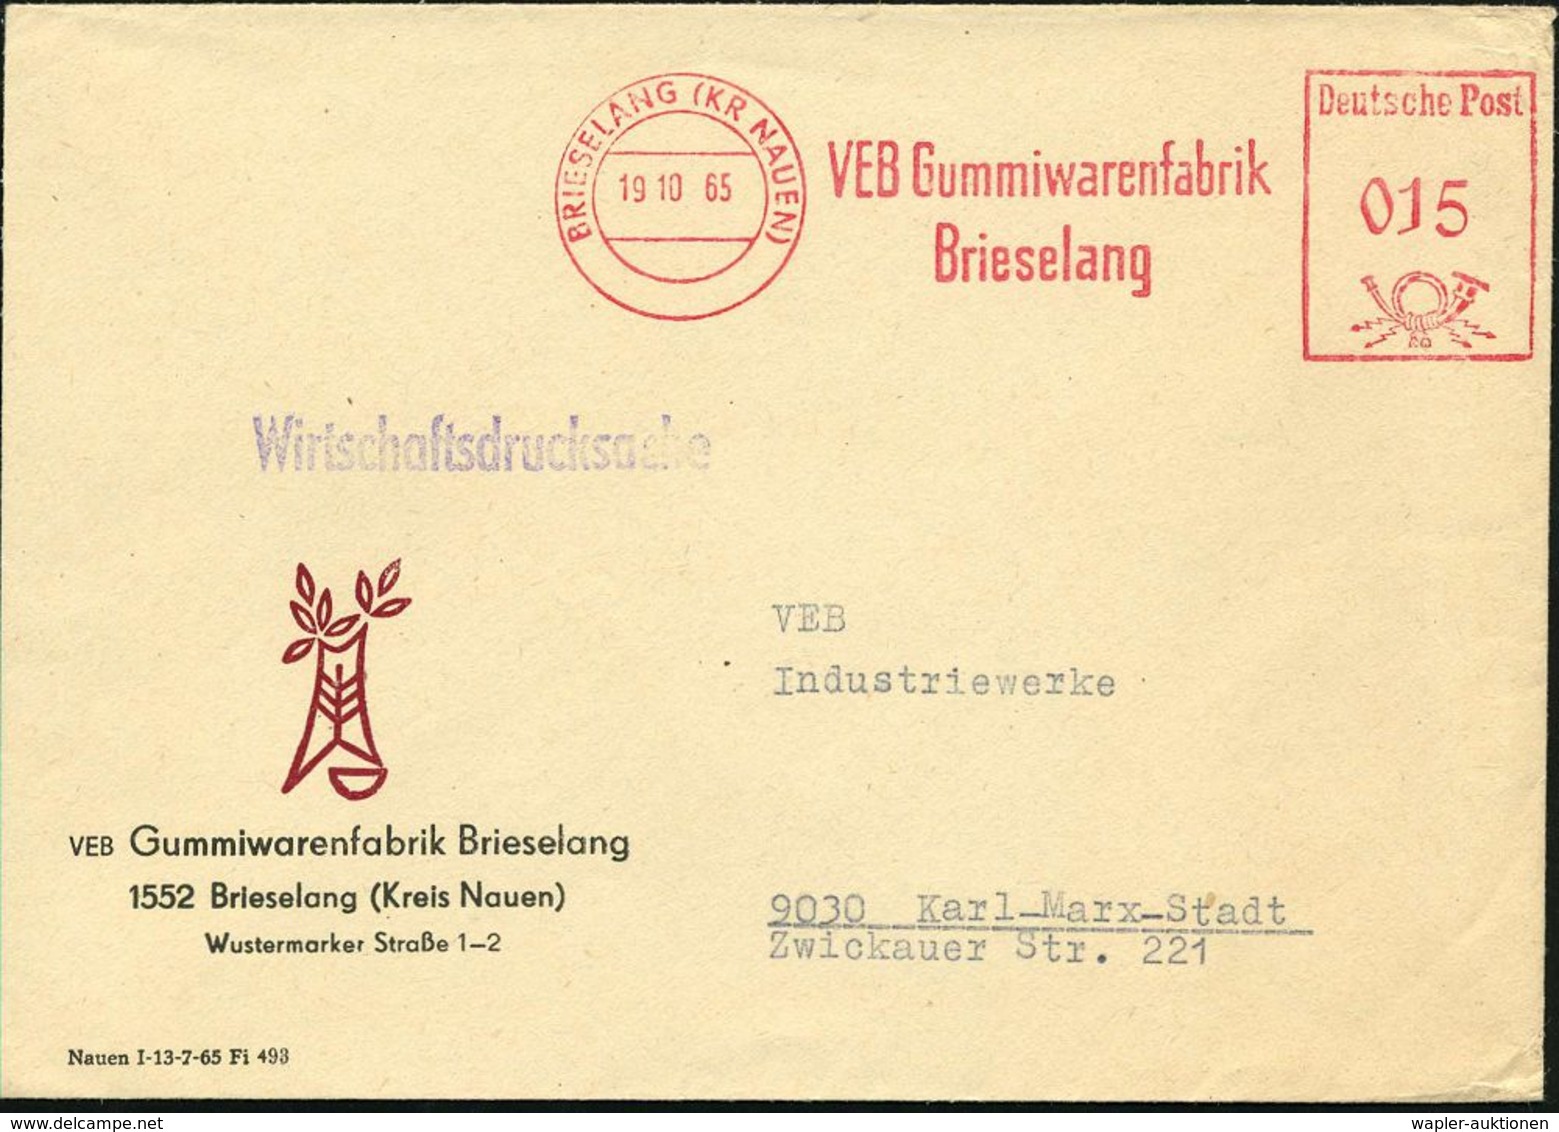 GUMMI / KAUTSCHUK : BRIESELANG (KR NAUEN)/ VEB Gummiwarenfabrik 1965 (19.10.) AFS Klar Auf Firmen-Bf.: VEB Gummiwarenfab - Chimica